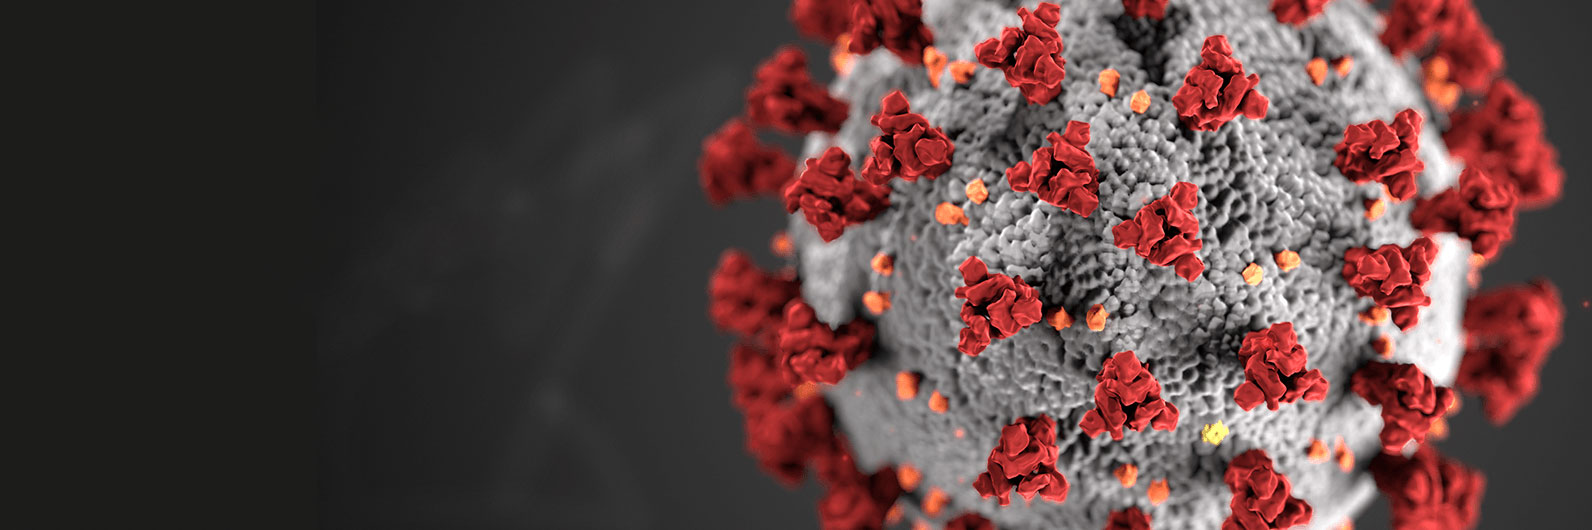 microscopic image of the COVID-19 virus